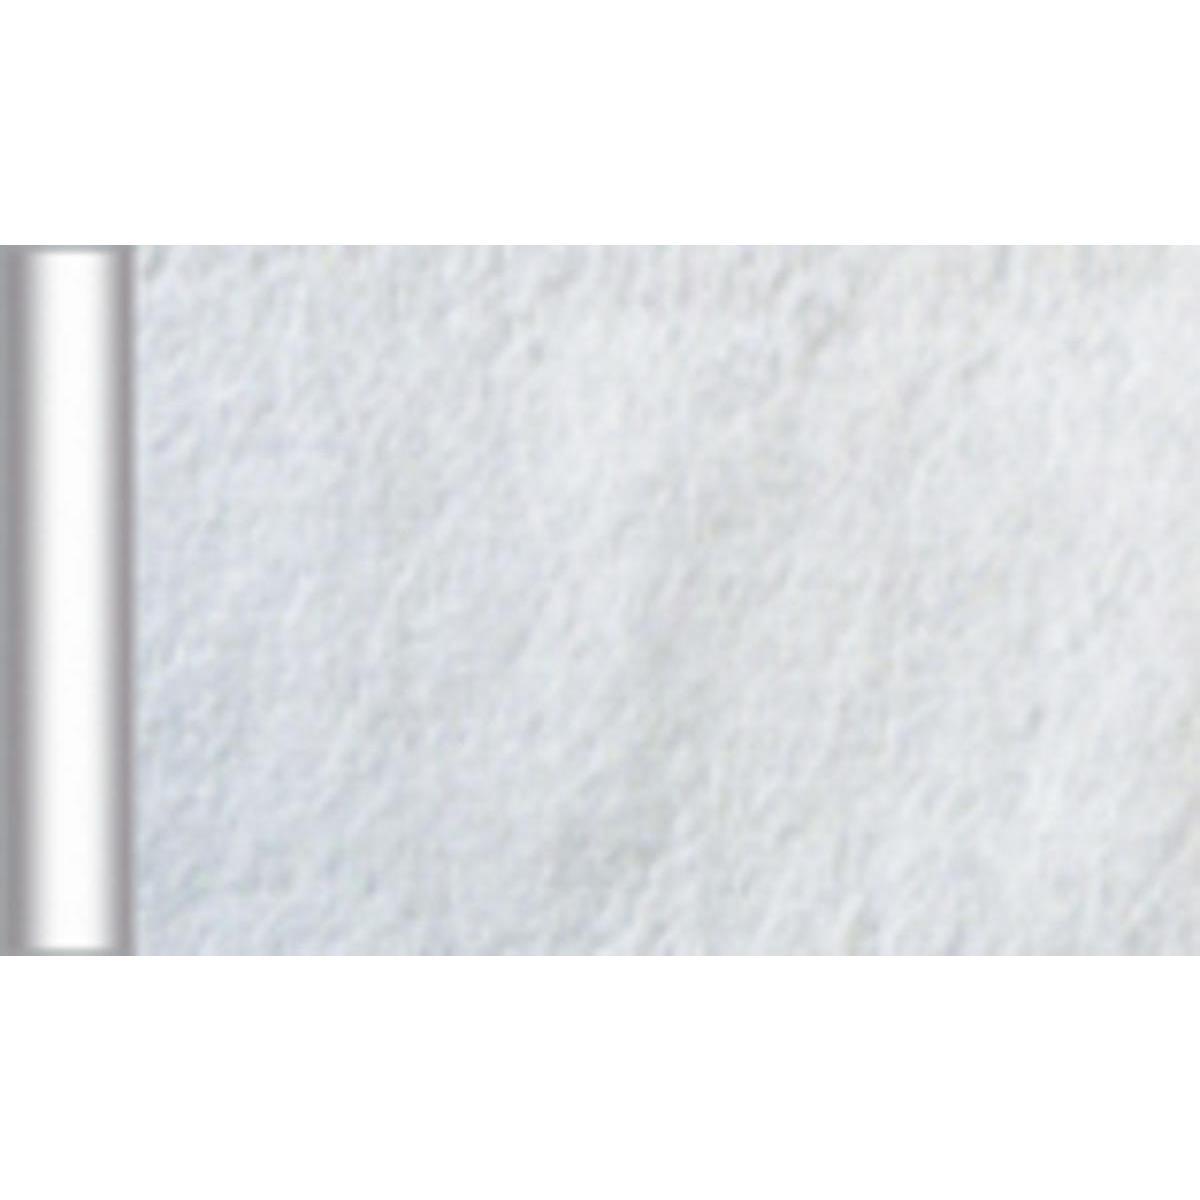 Chemin de table non tissé - 4,8 x 0,4 m - Intissé (soft) - Blanc